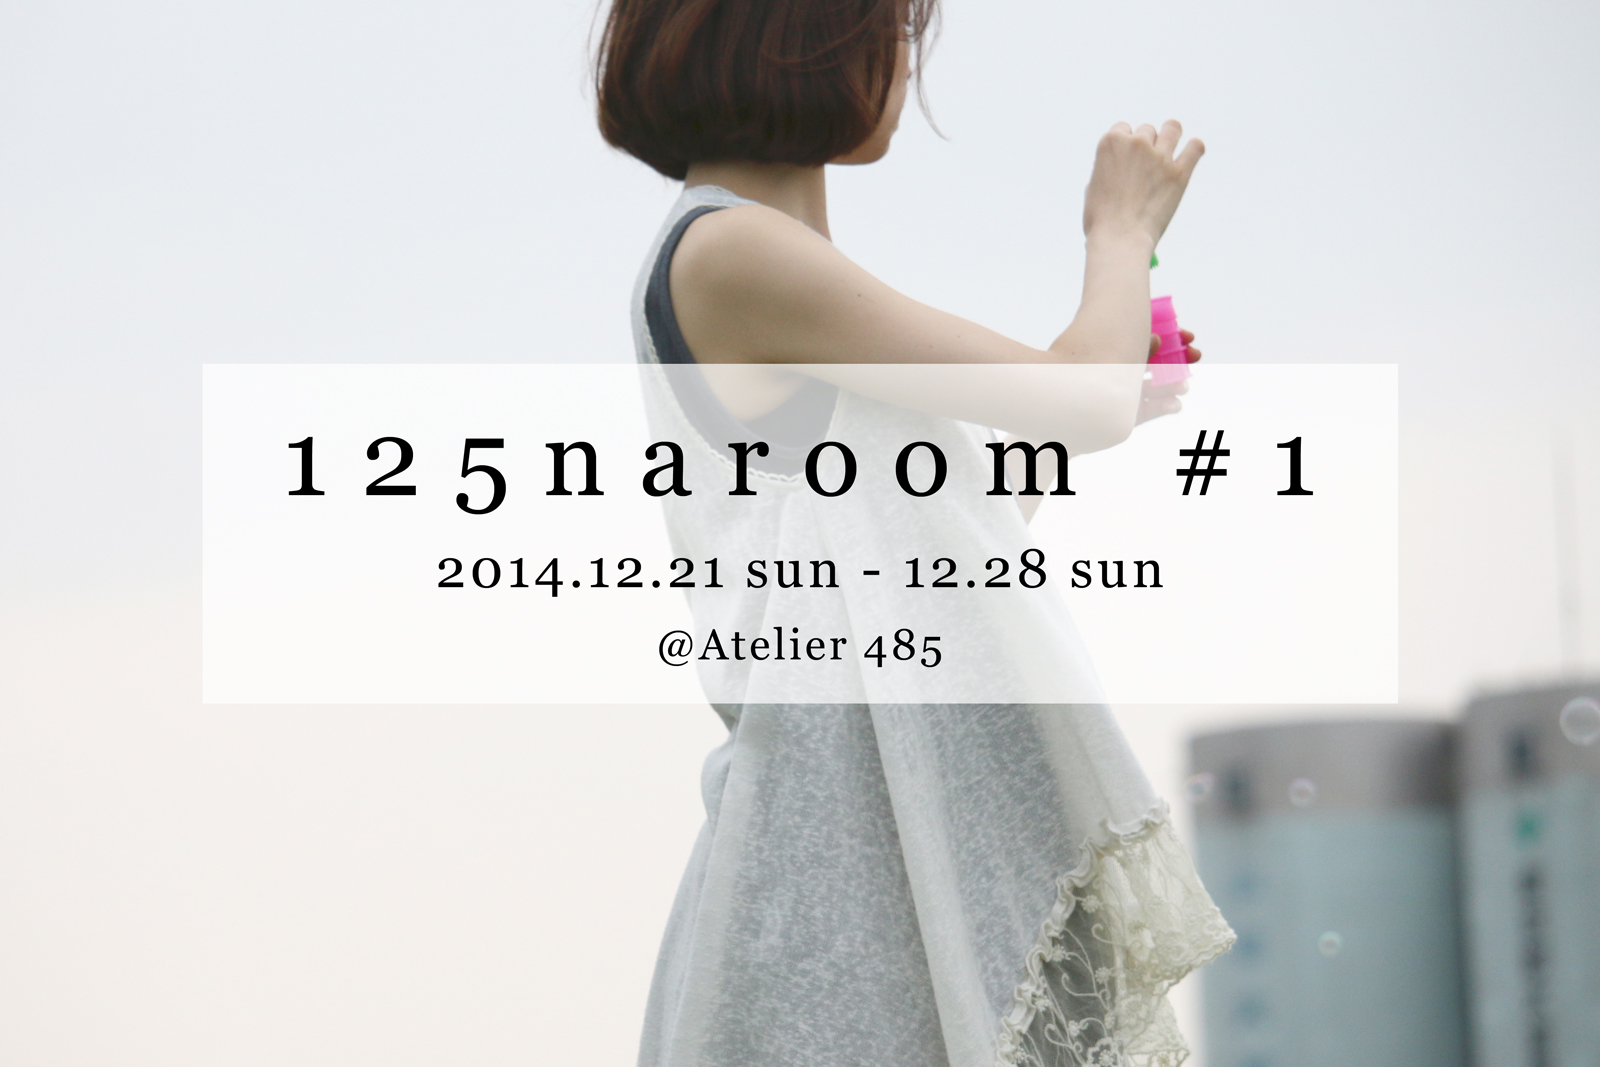 125naroom #1 @Atelier 485 / Trailer